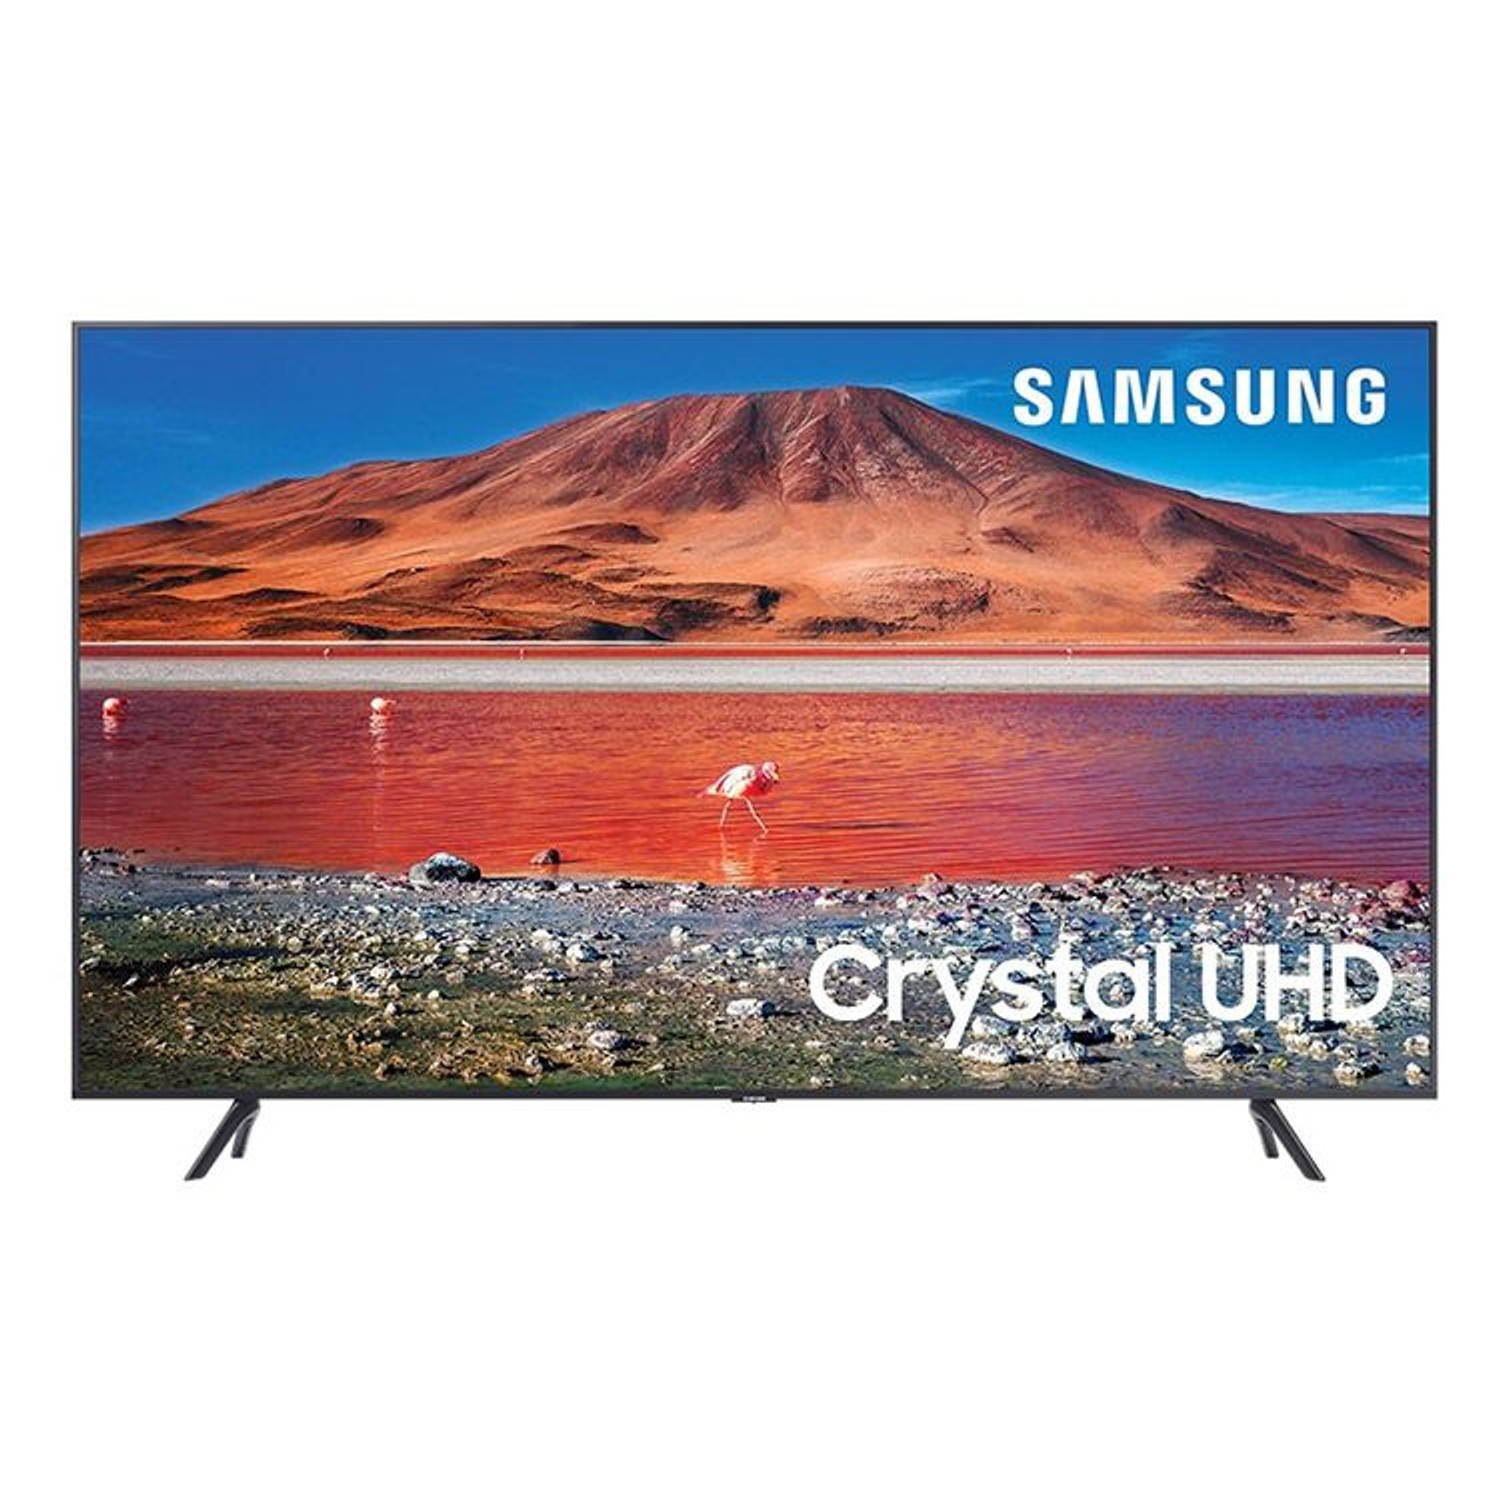 Samsung UE75TU7100 - 4K HDR LED Smart TV (75 inch)